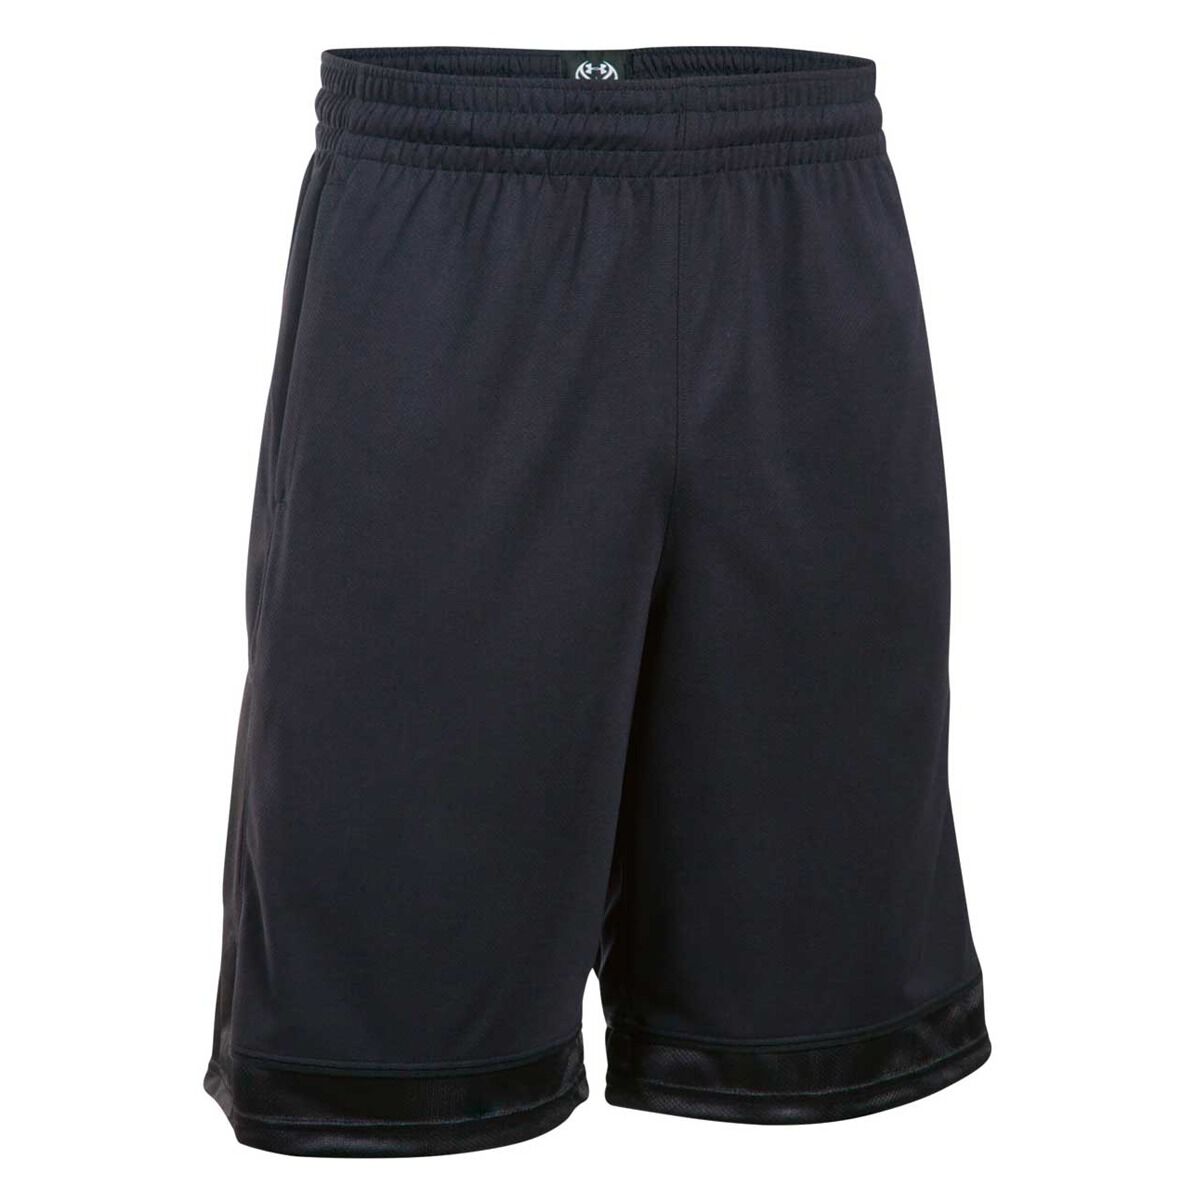 basketball under shorts